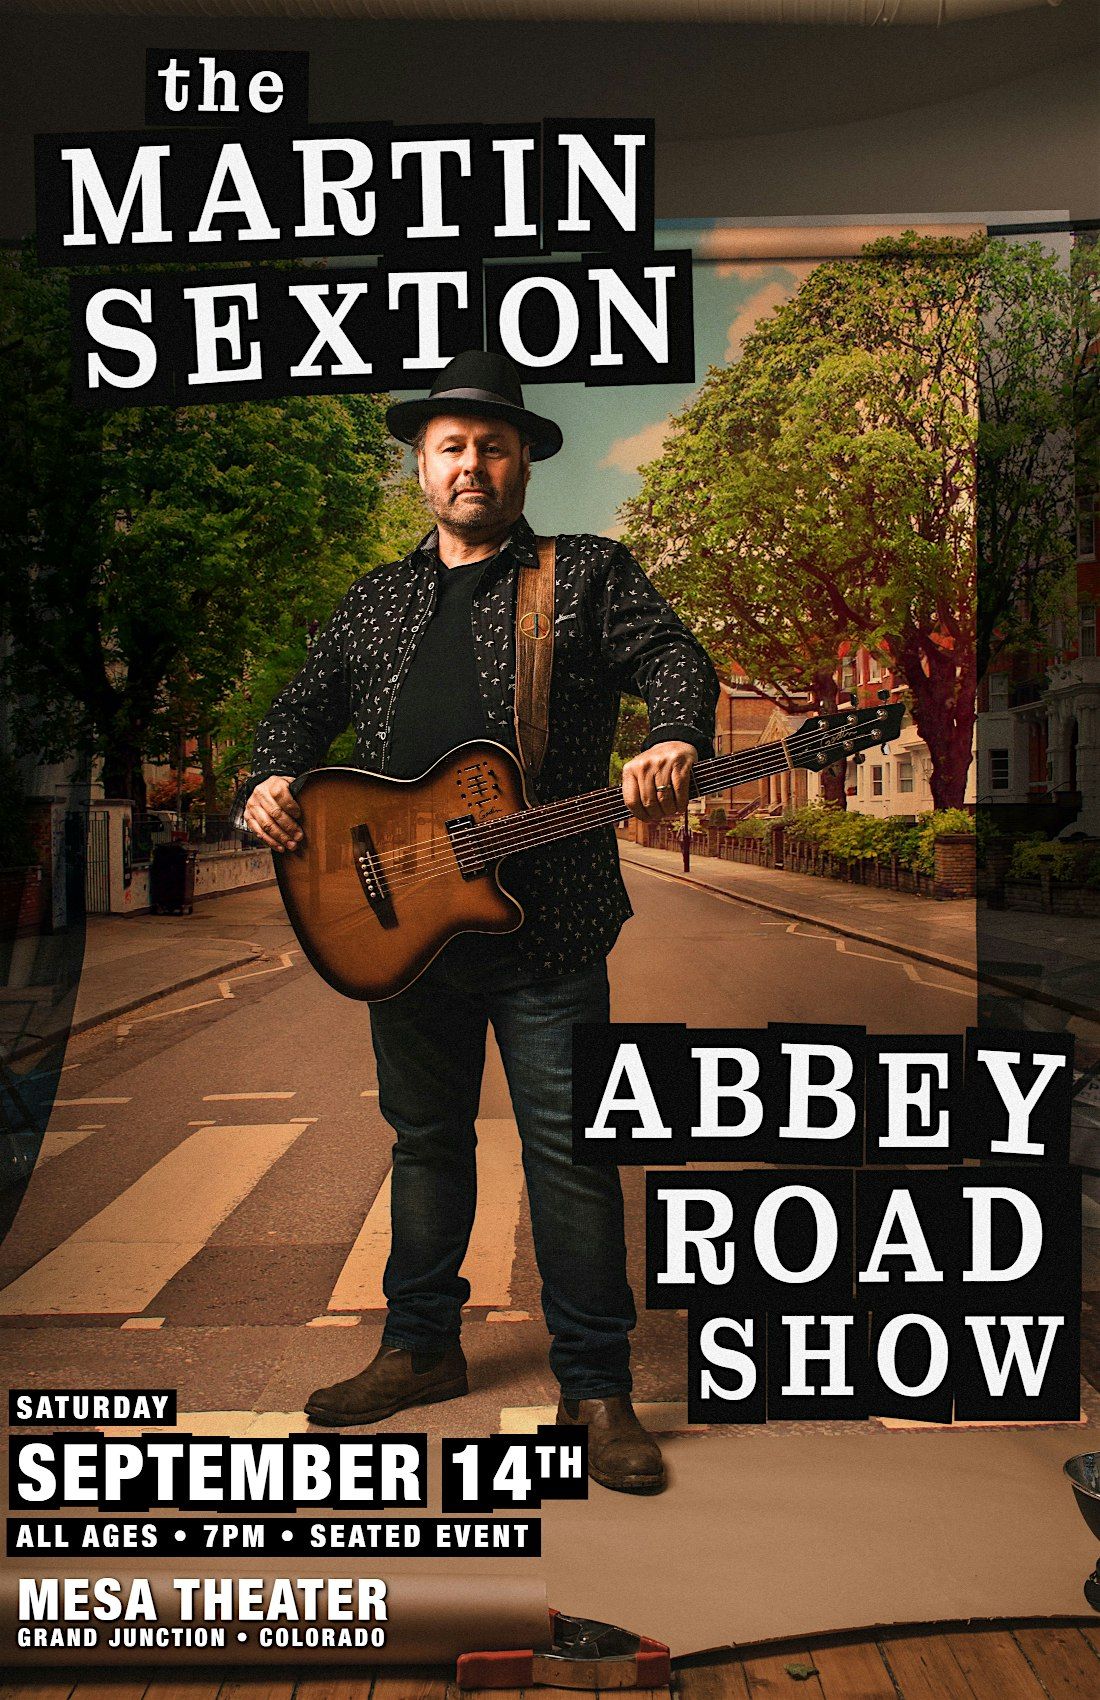 The Martin Sexton Abbey Road Show